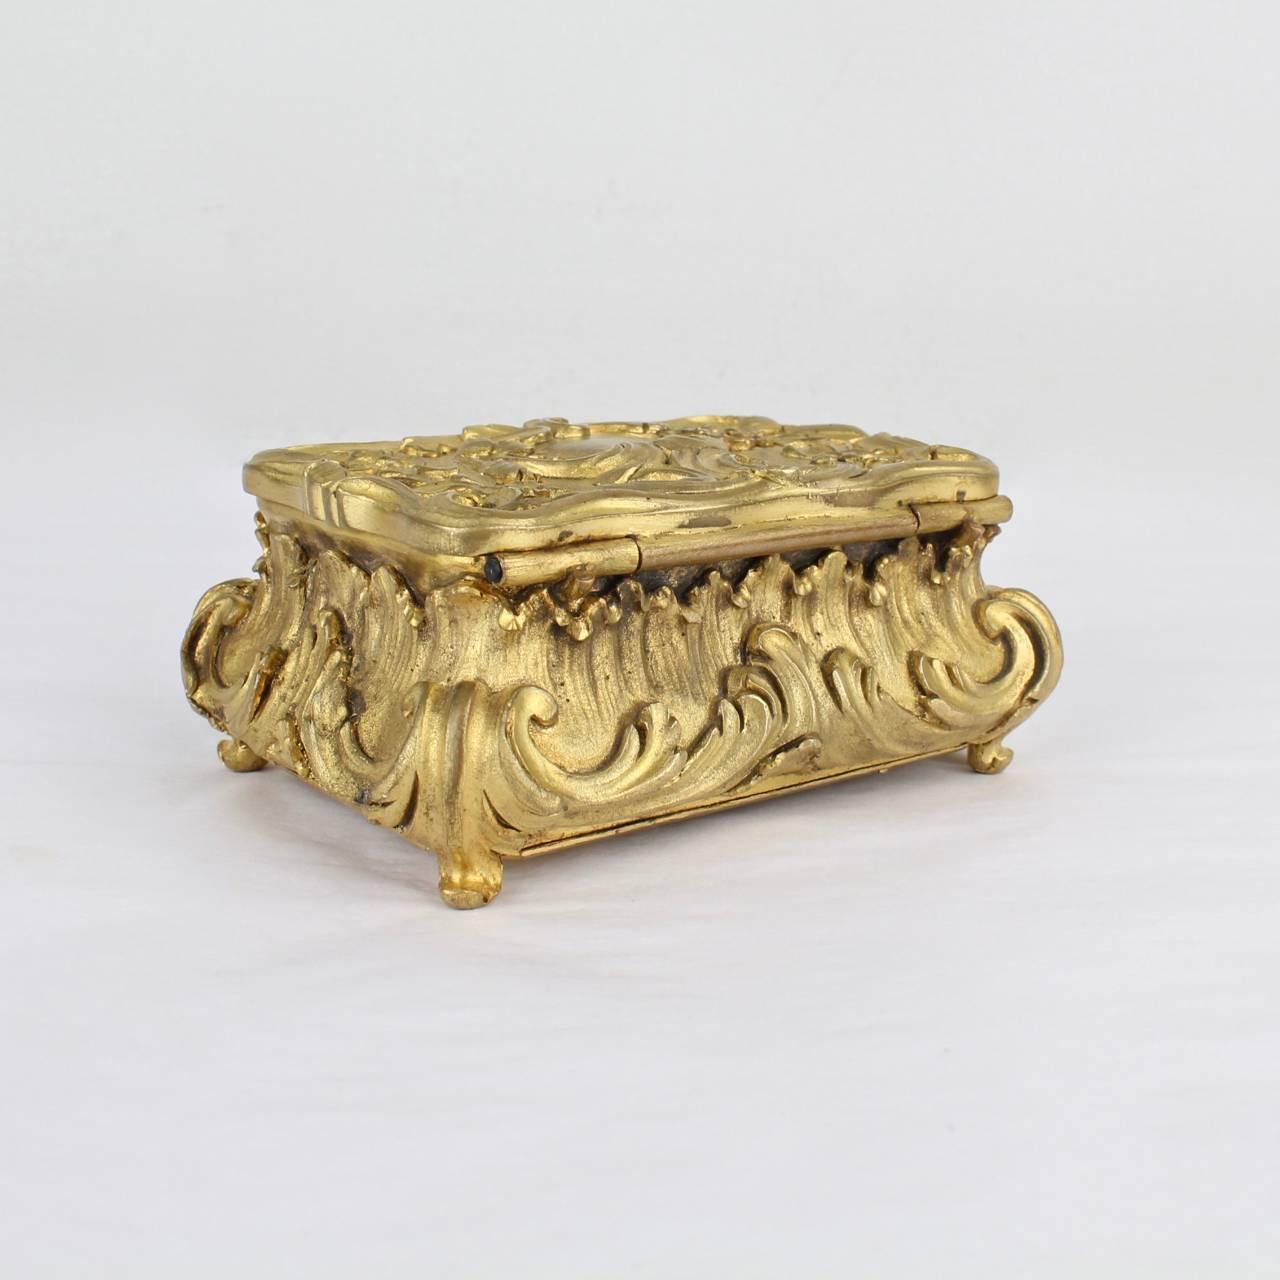 Antique Small Doré Gilt Bronze Table Box or Casket, 19th Century (Vergoldet)